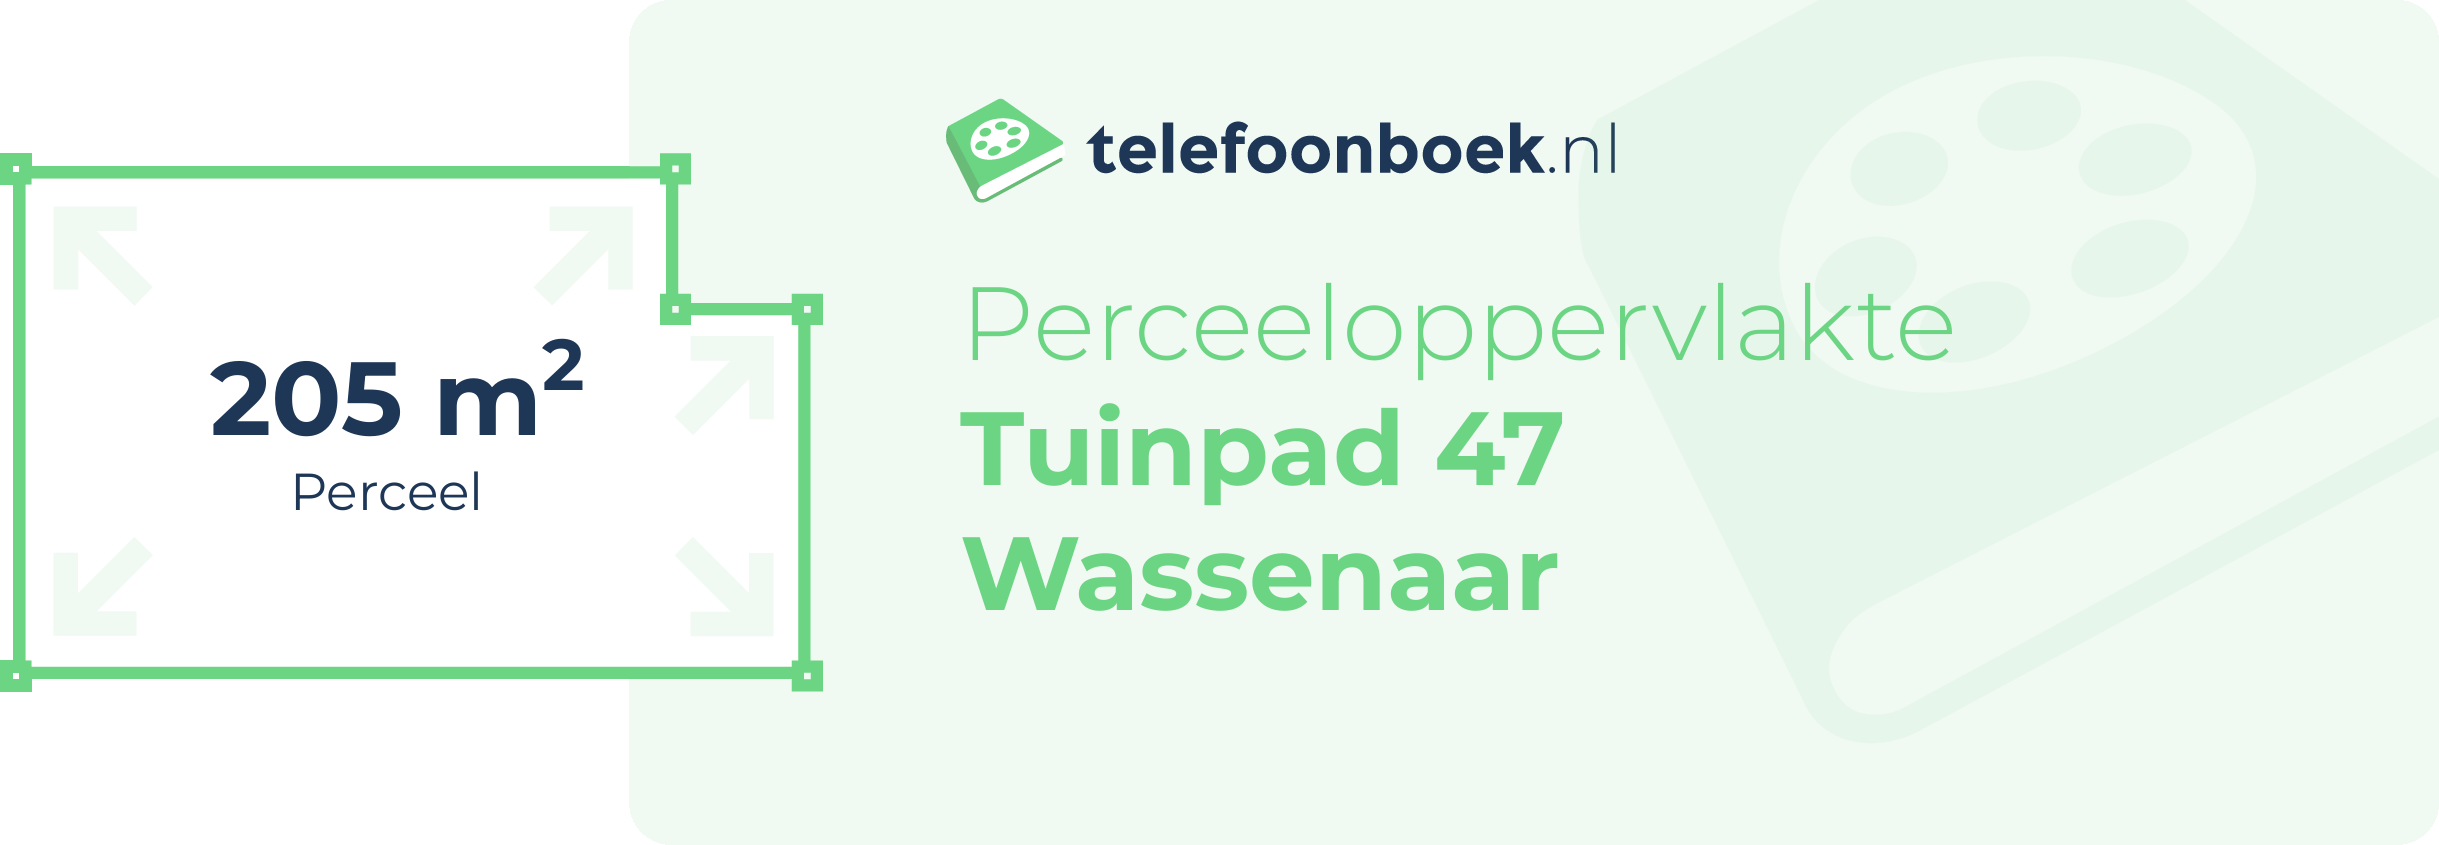 Perceeloppervlakte Tuinpad 47 Wassenaar